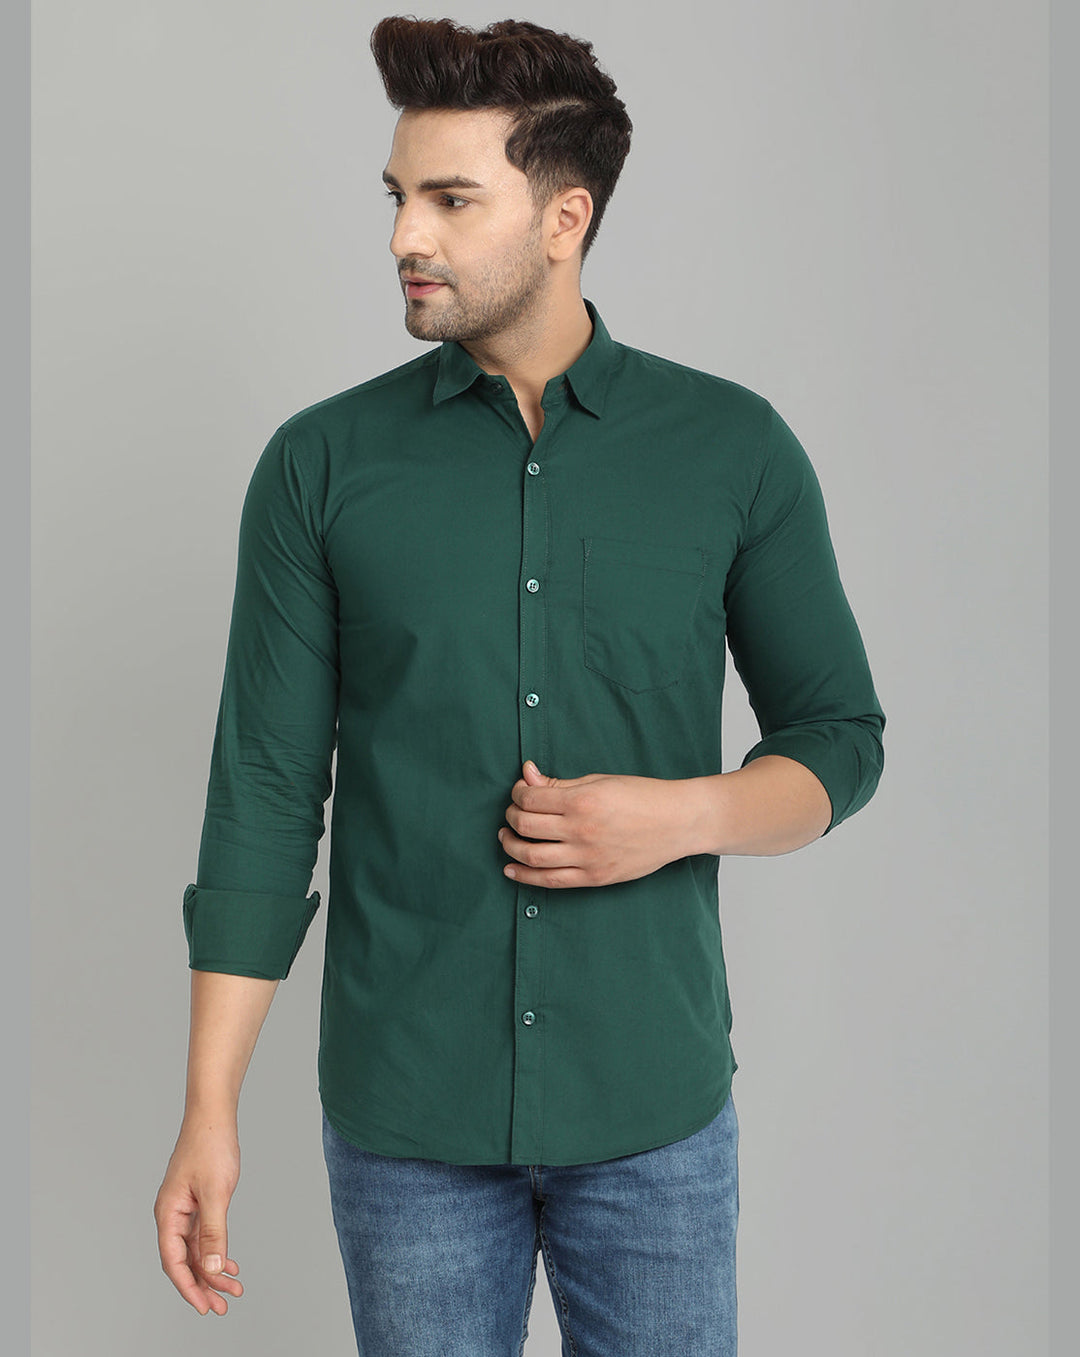 Groovy Pure Cotton Solid shirt - Dark Green